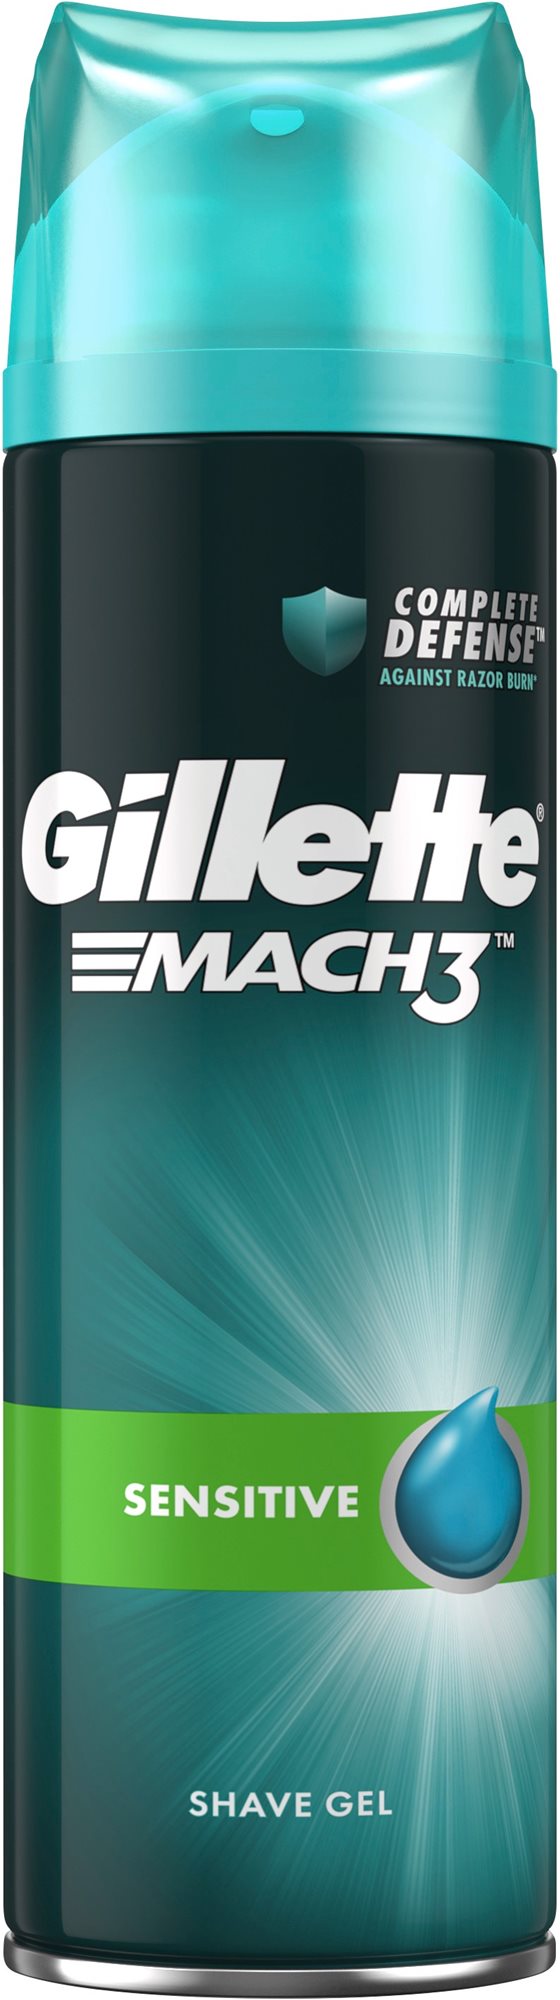 GILLETTE Mach3 Complete Defense Sensitive 200 ml